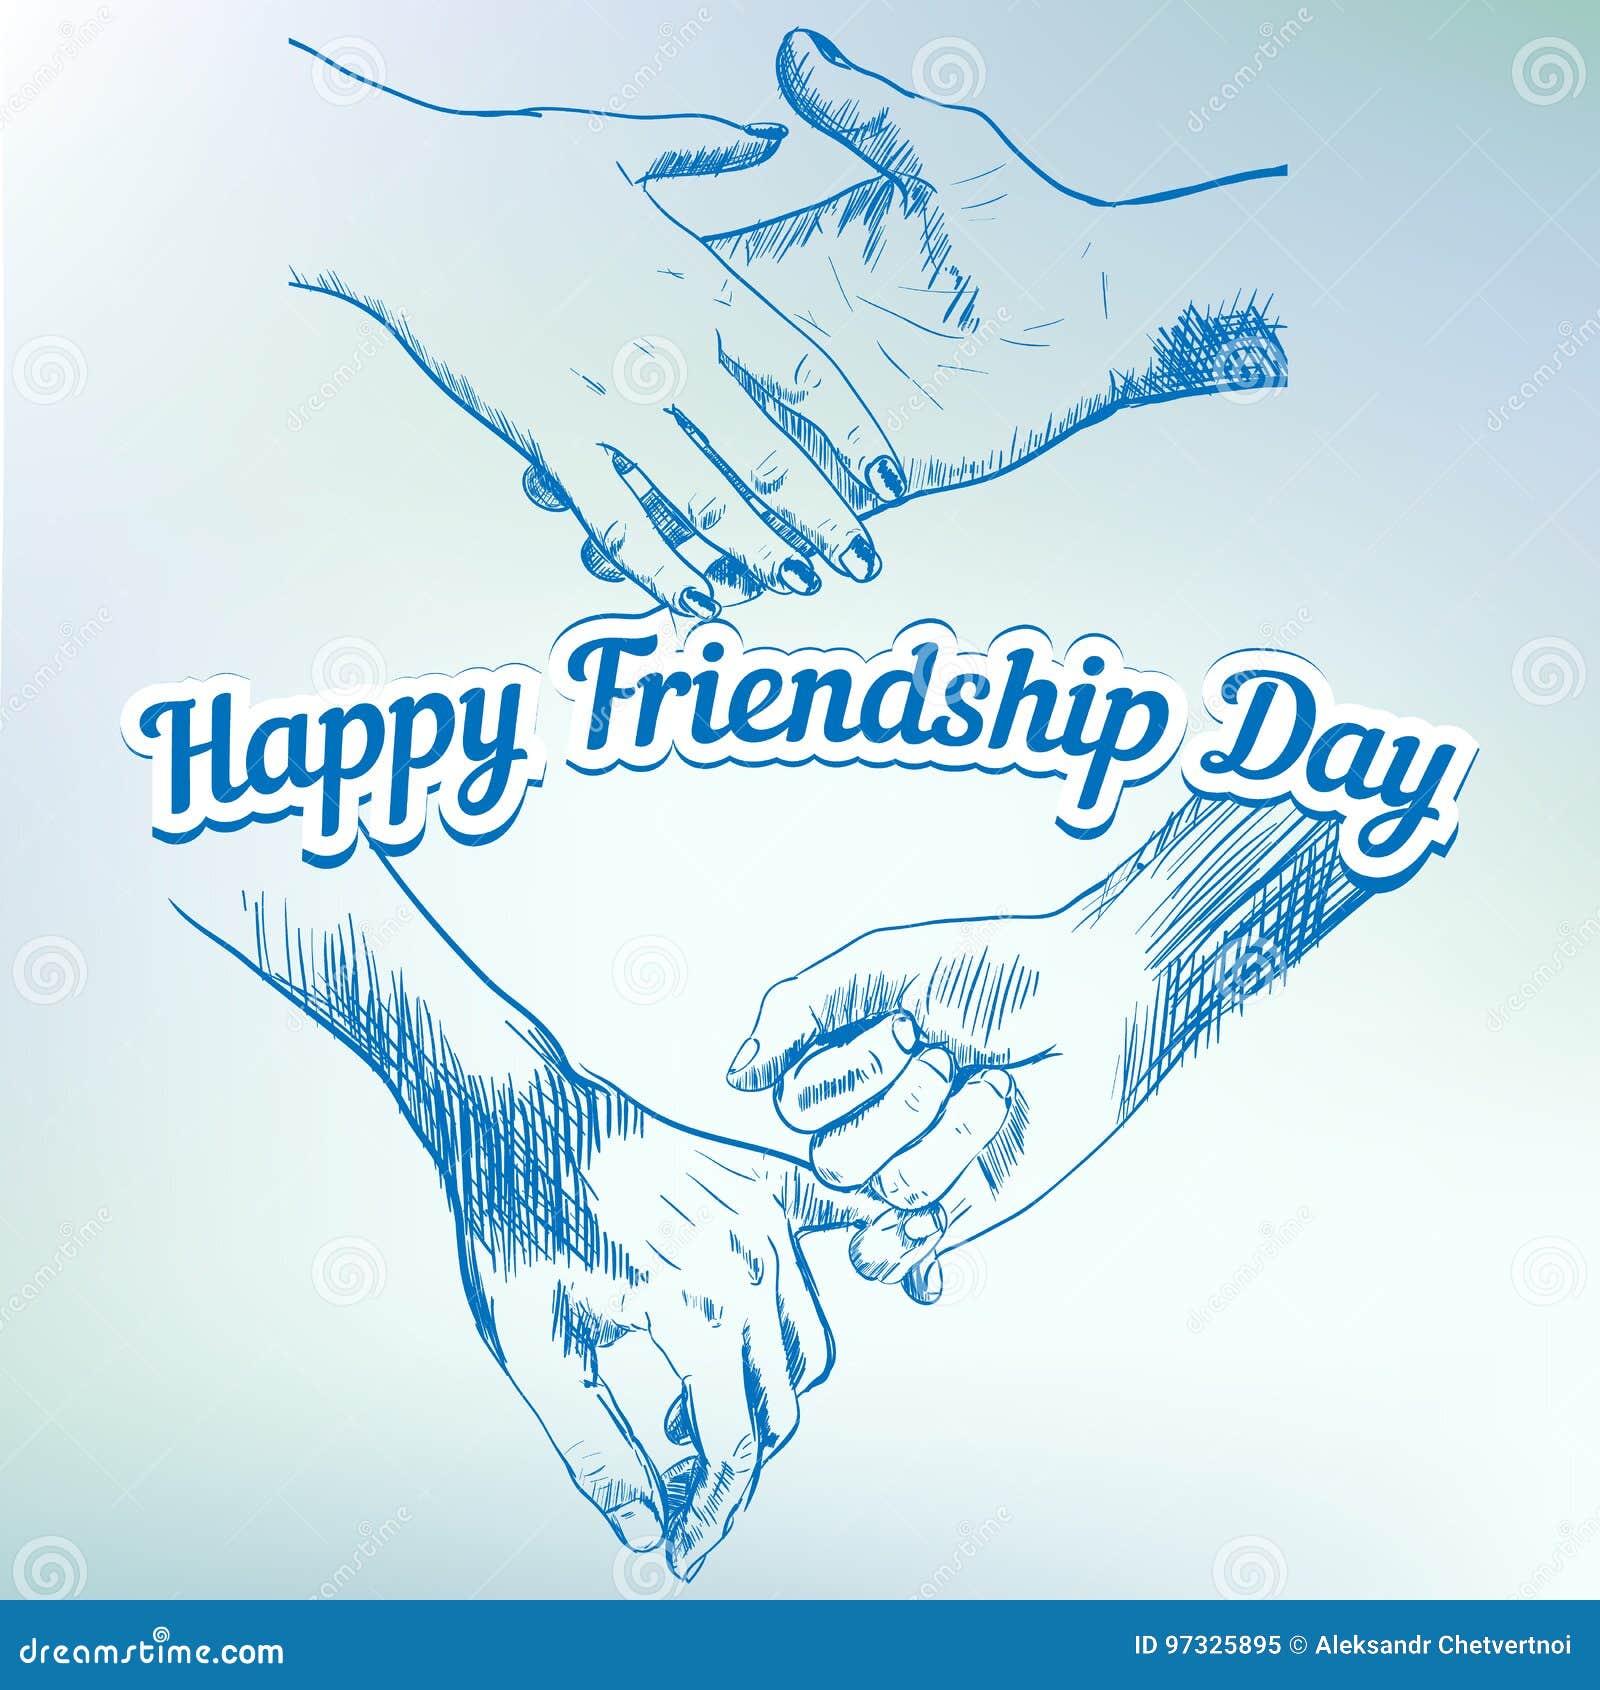 Friendship Day Message - अपने दोस्तो को भेजे ये प्यारे मैसेज-saigonsouth.com.vn